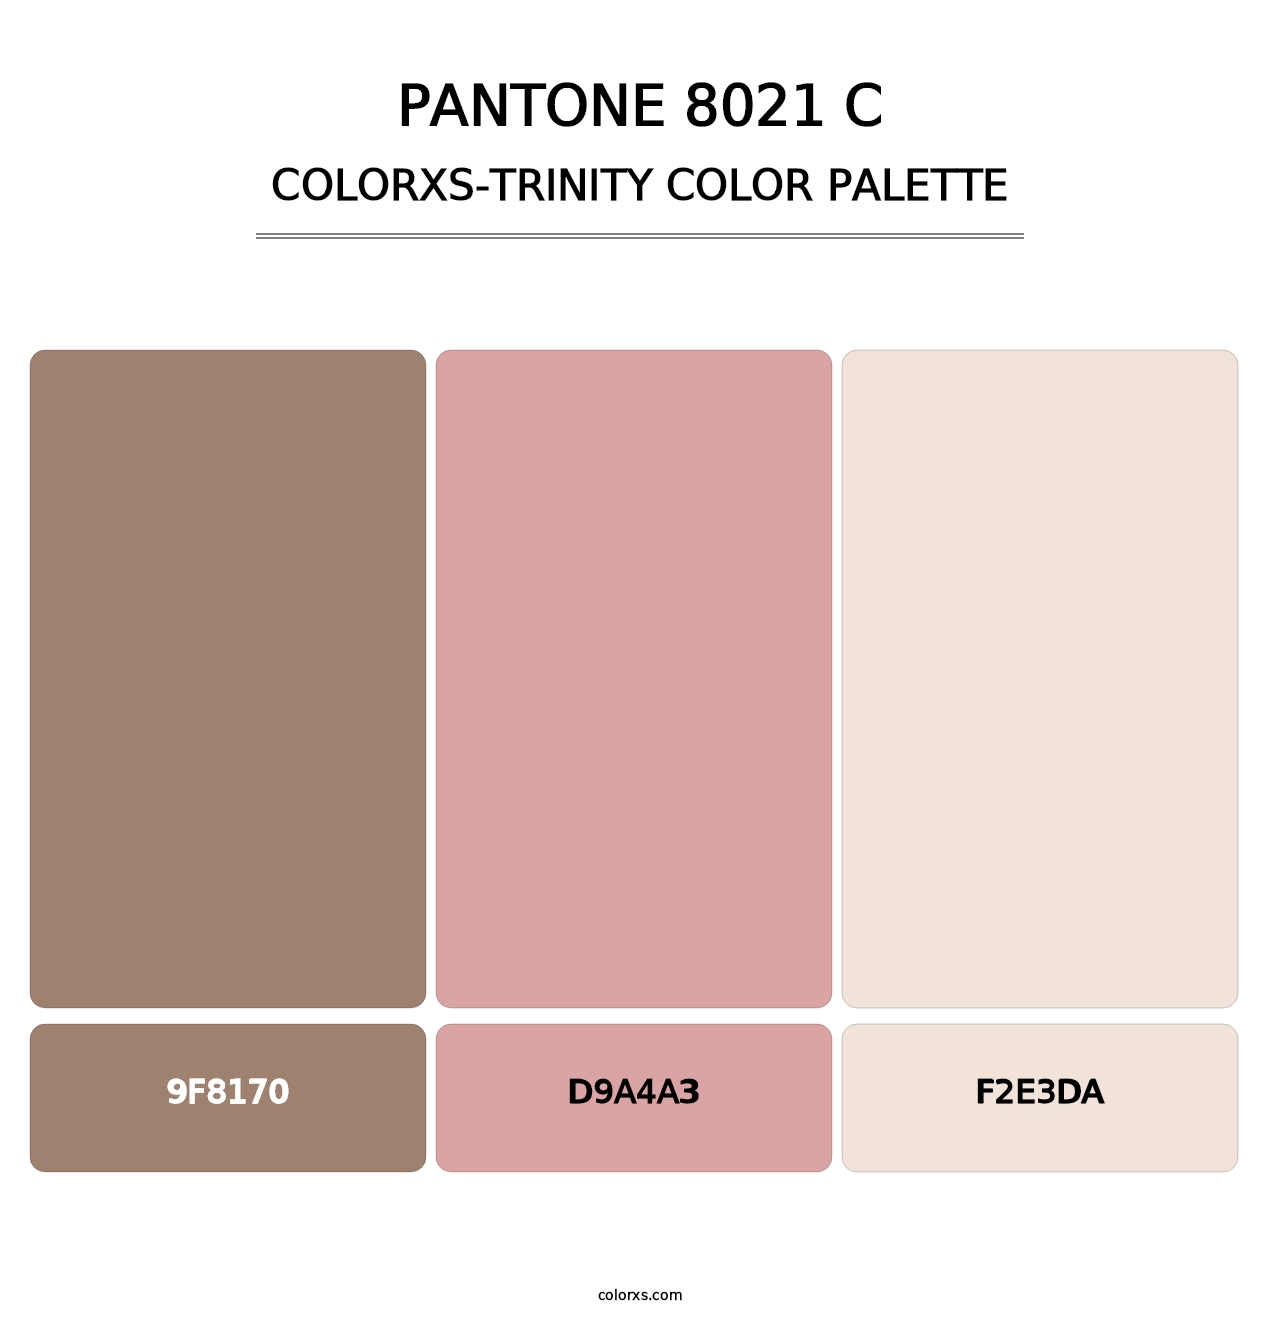 PANTONE 8021 C - Colorxs Trinity Palette